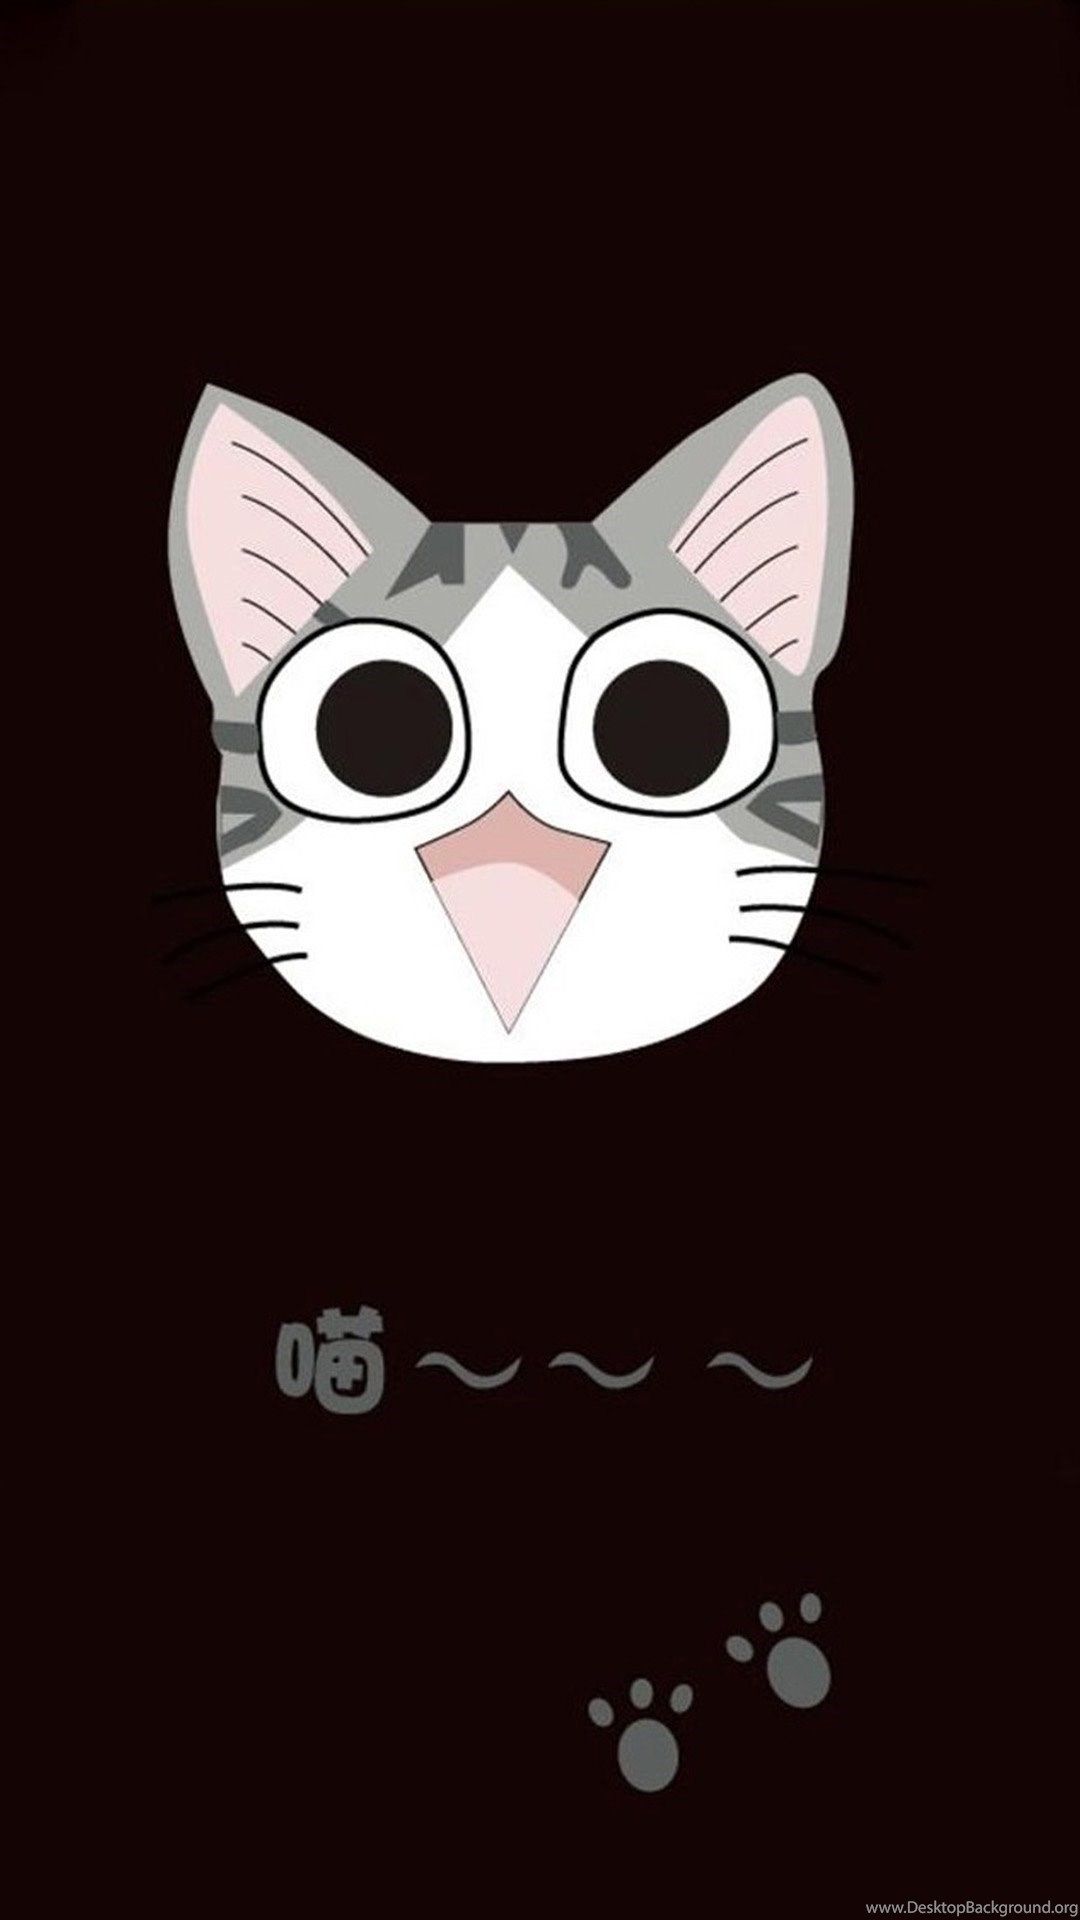 Cute Cat Cartoon 06 Galaxy S5 Desktop Background